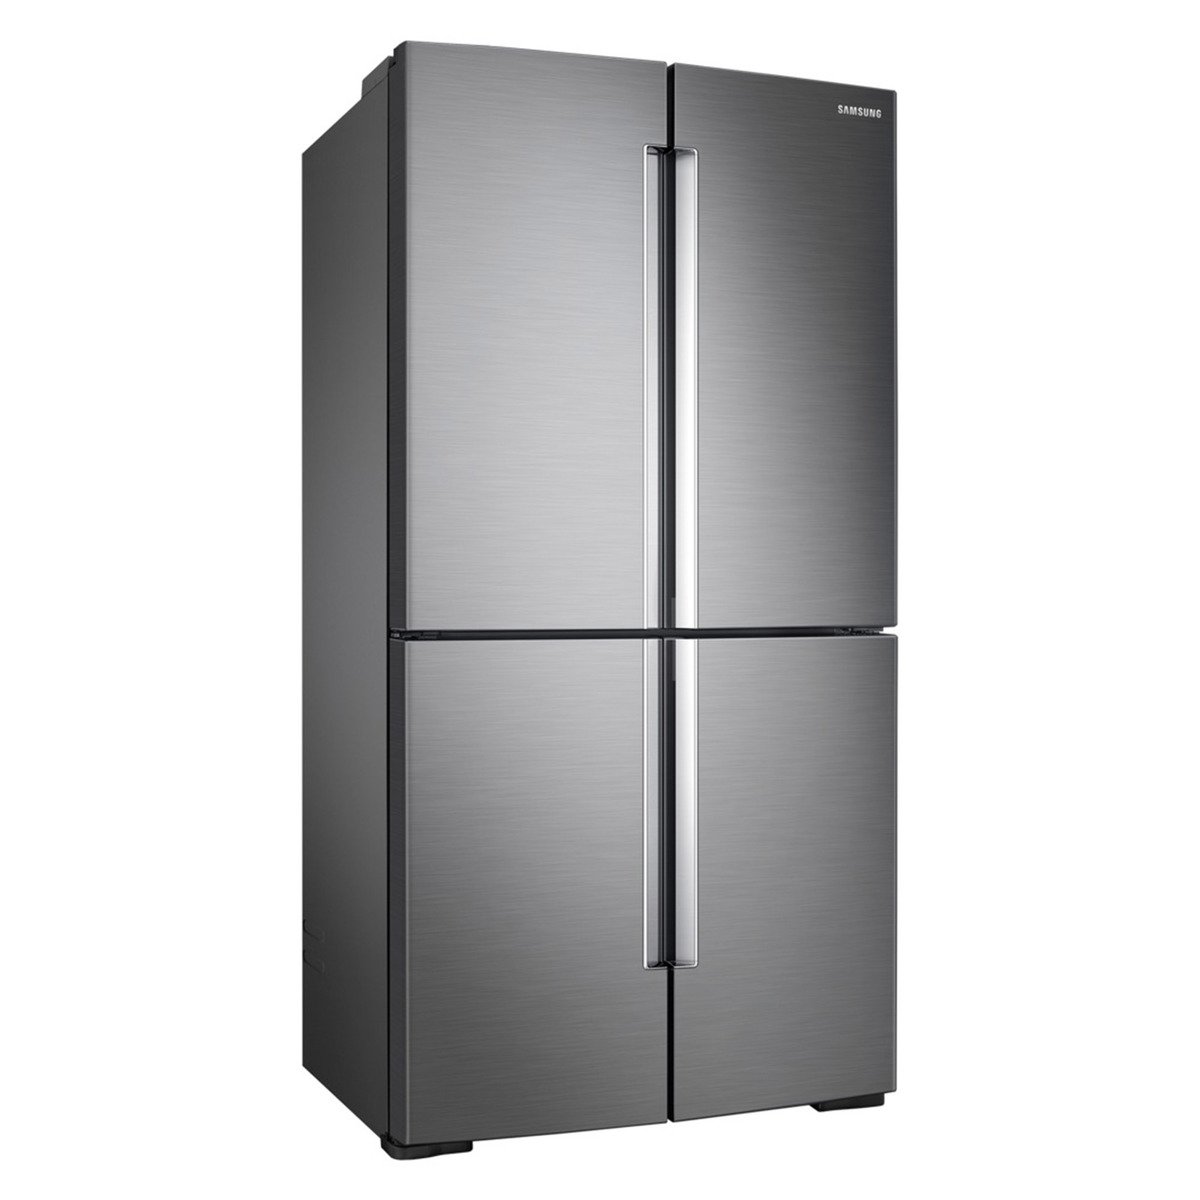 Samsung French Door Refrigerator RF60N91H3SL 675Ltr